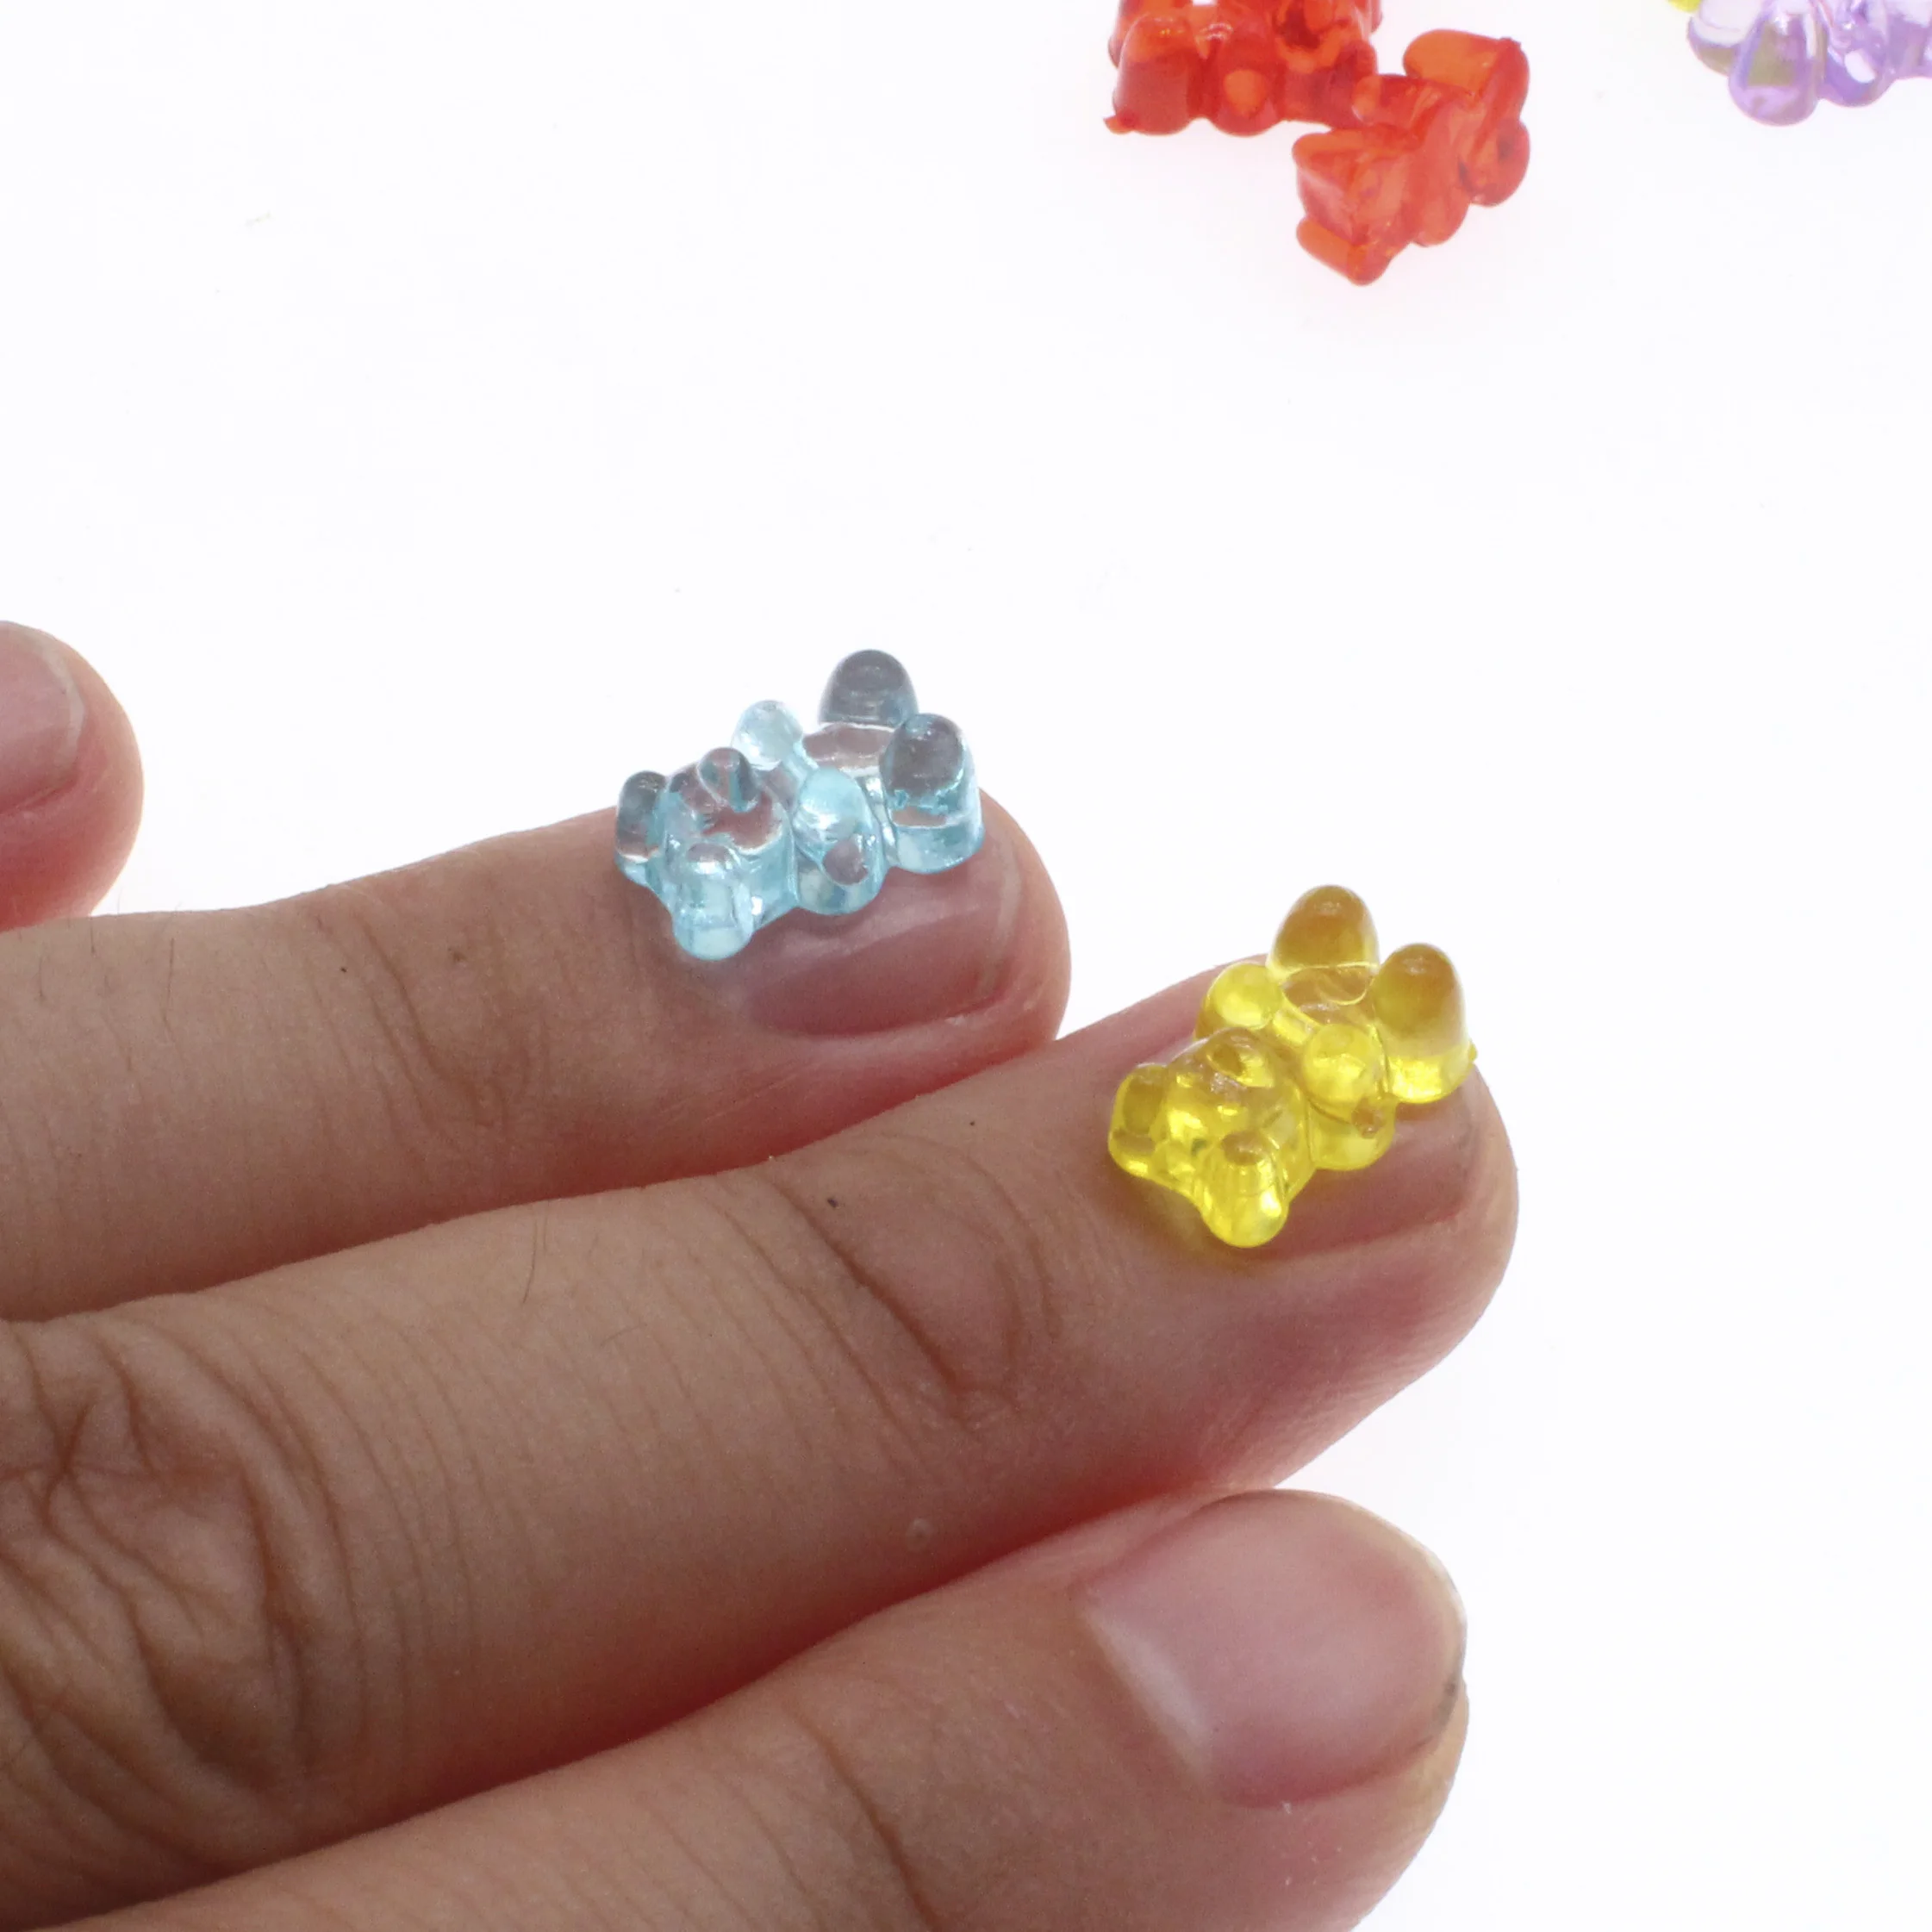 50 Mixed Color Transparent Acrylic Gummy Bear Beads 18mm Bracelet